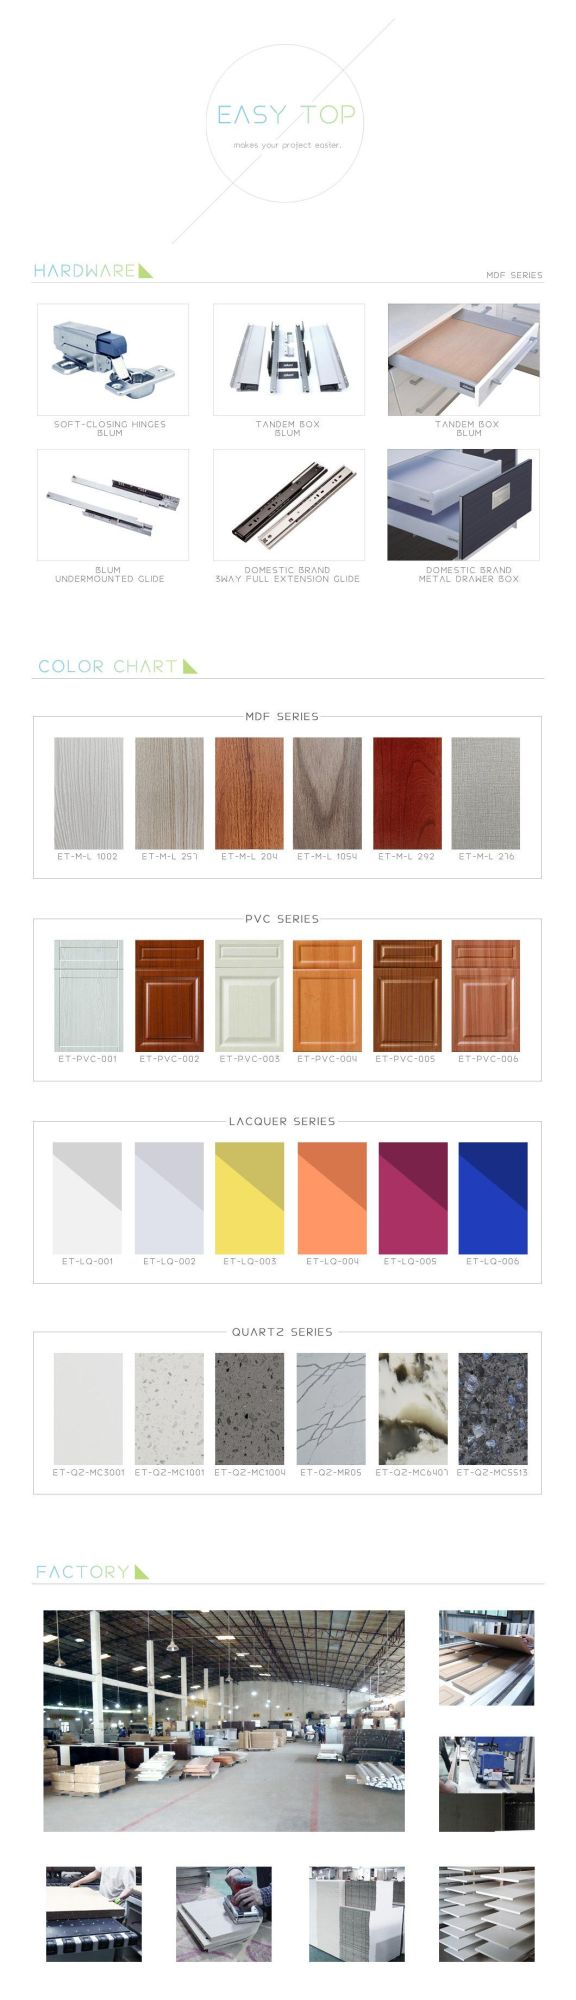 U-Shaped Matt White Lacquer Finish Door with Aluminium Handle kitchen Cabinets